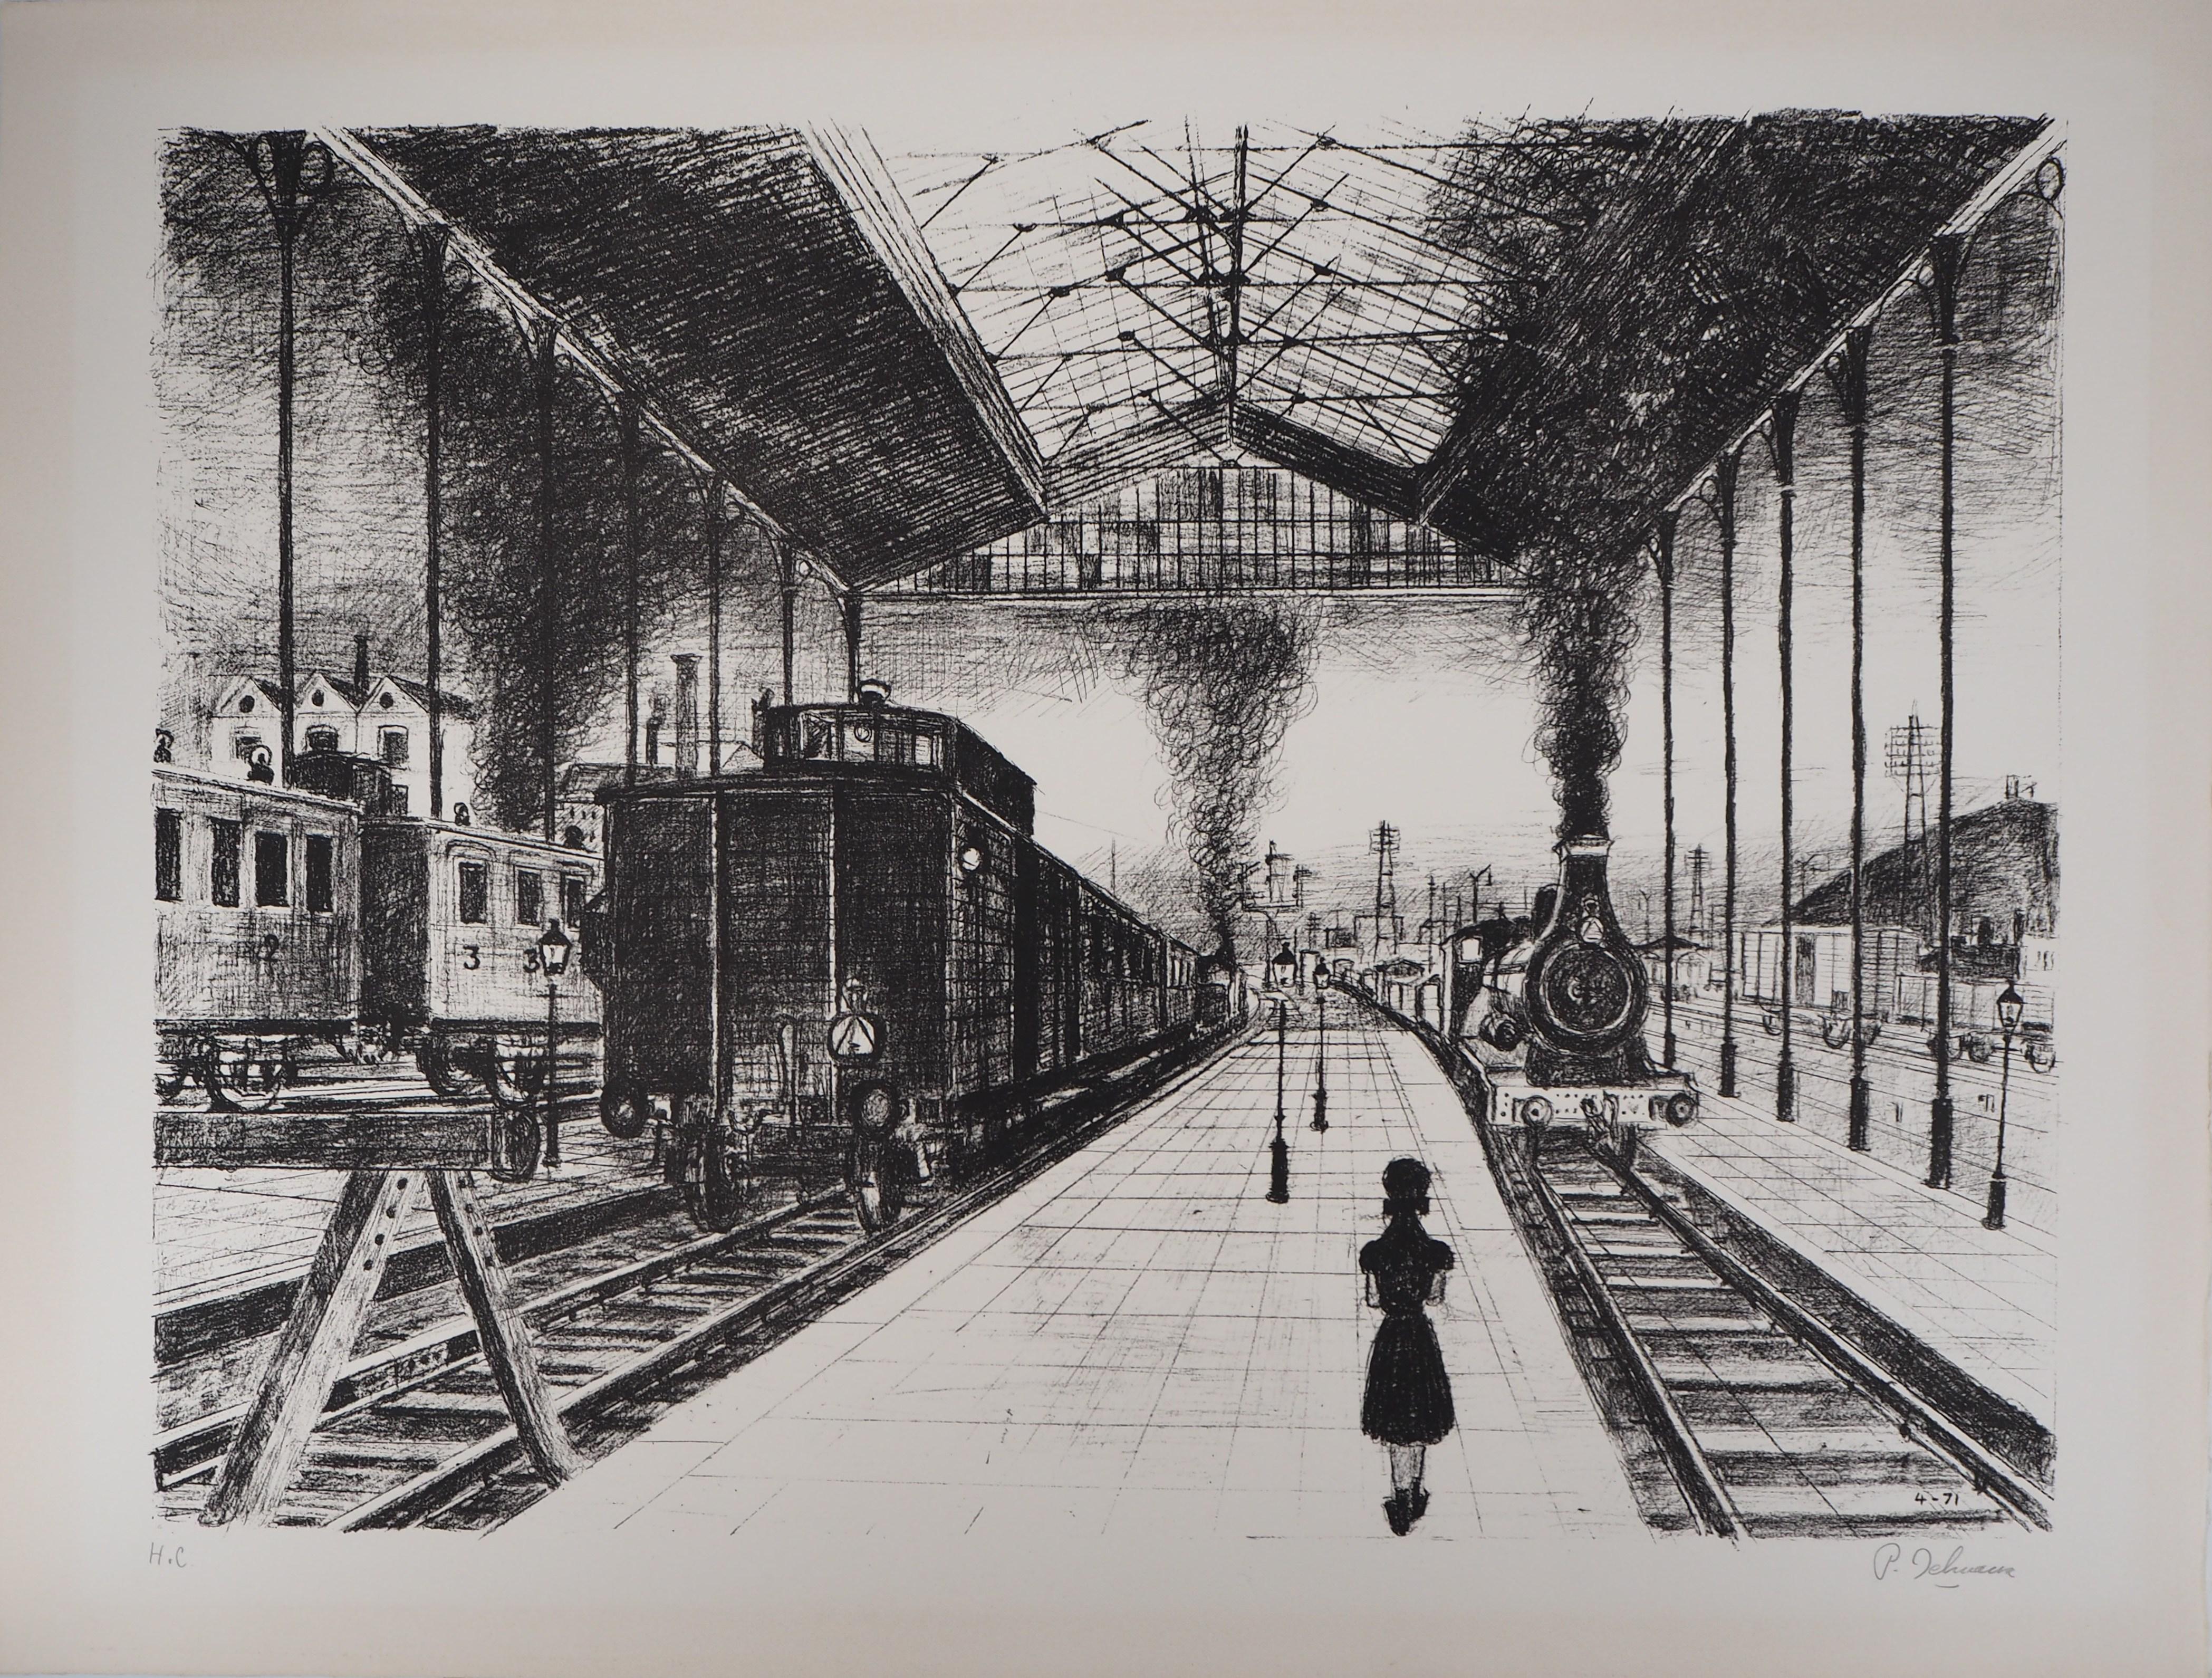 Paul Delvaux Figurative Print - The Train Station - Original signed lithograph - 1971